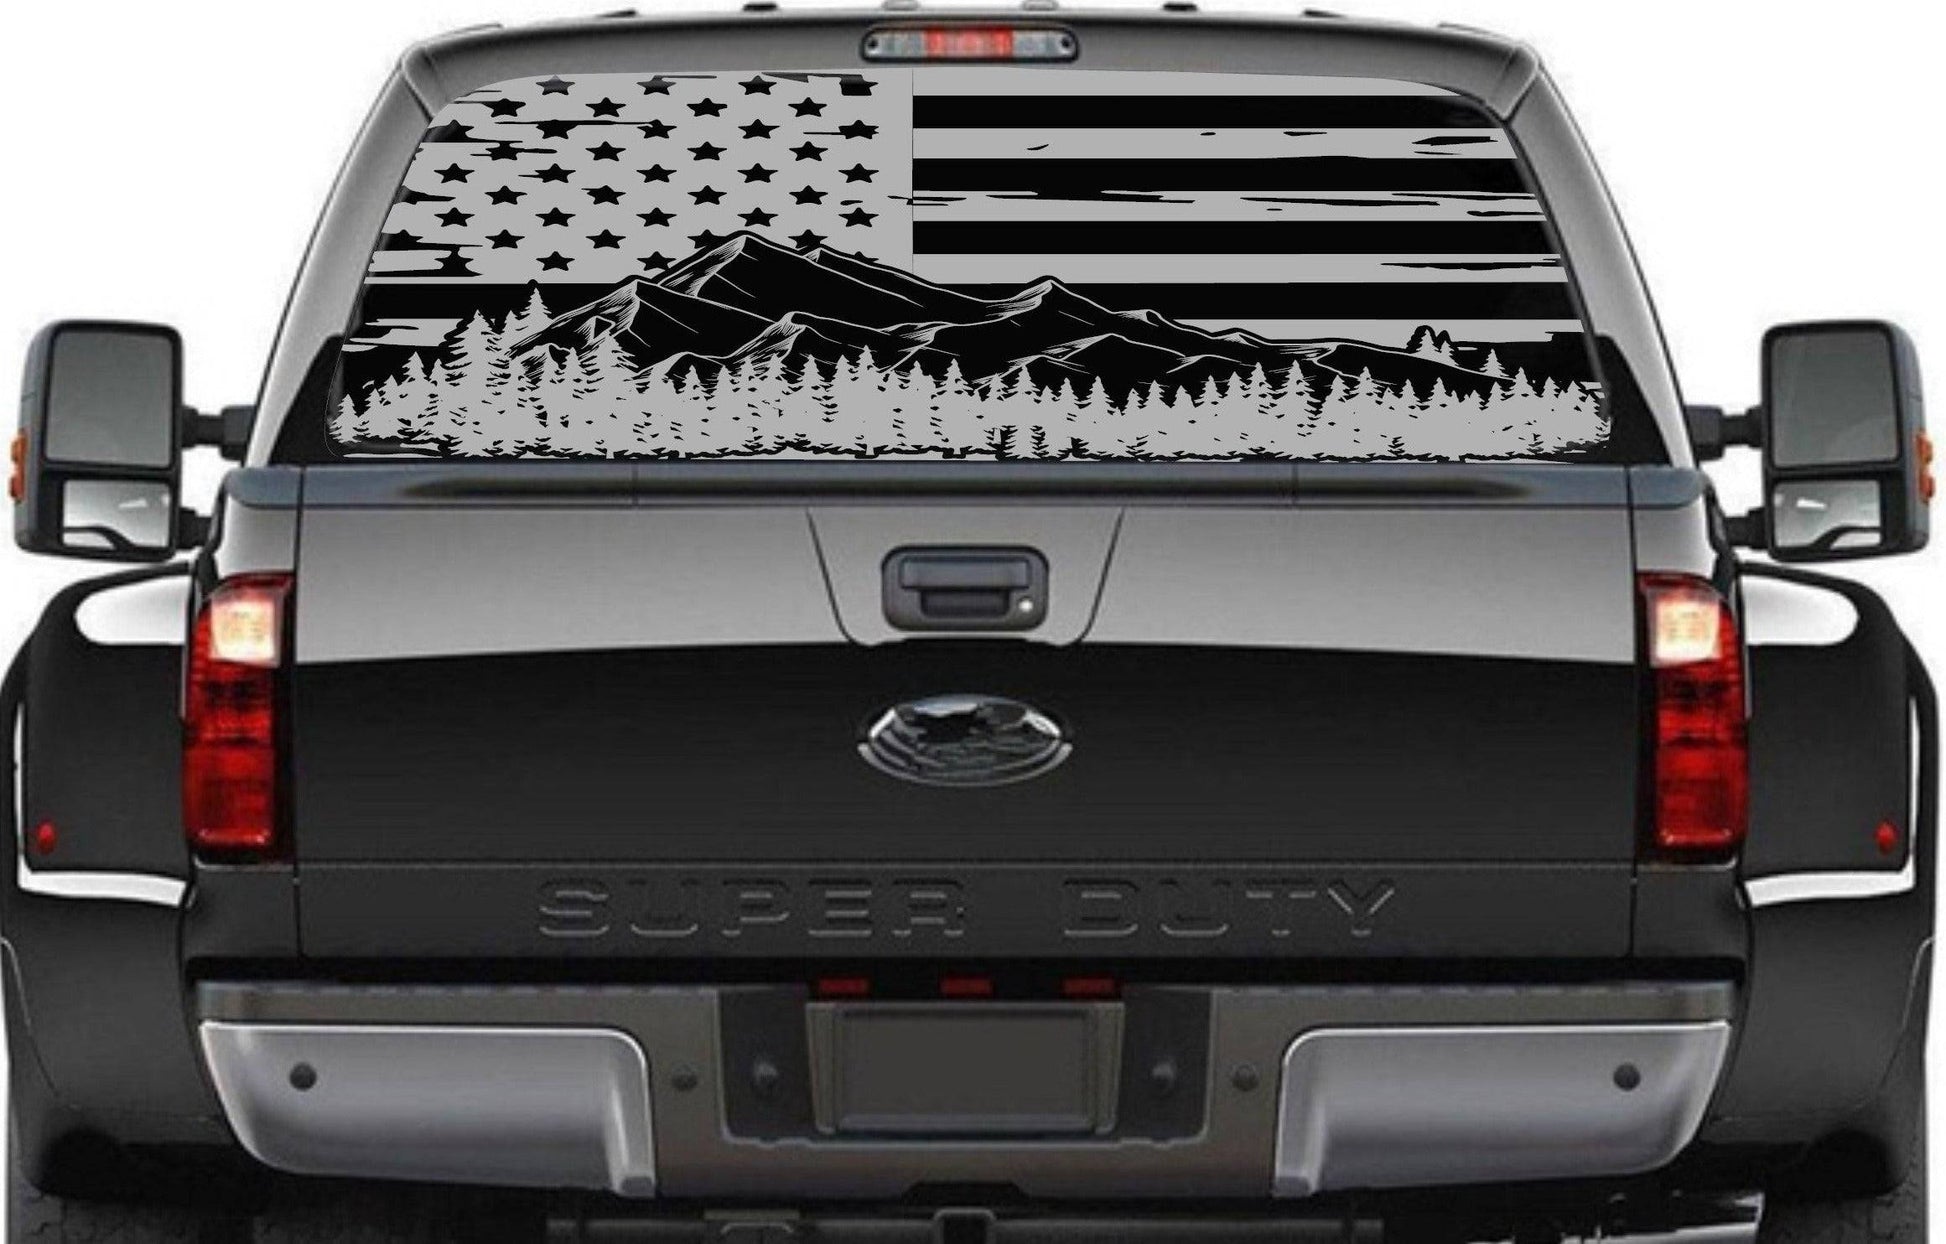 Stars & stripes vinyl cut vehicle decals